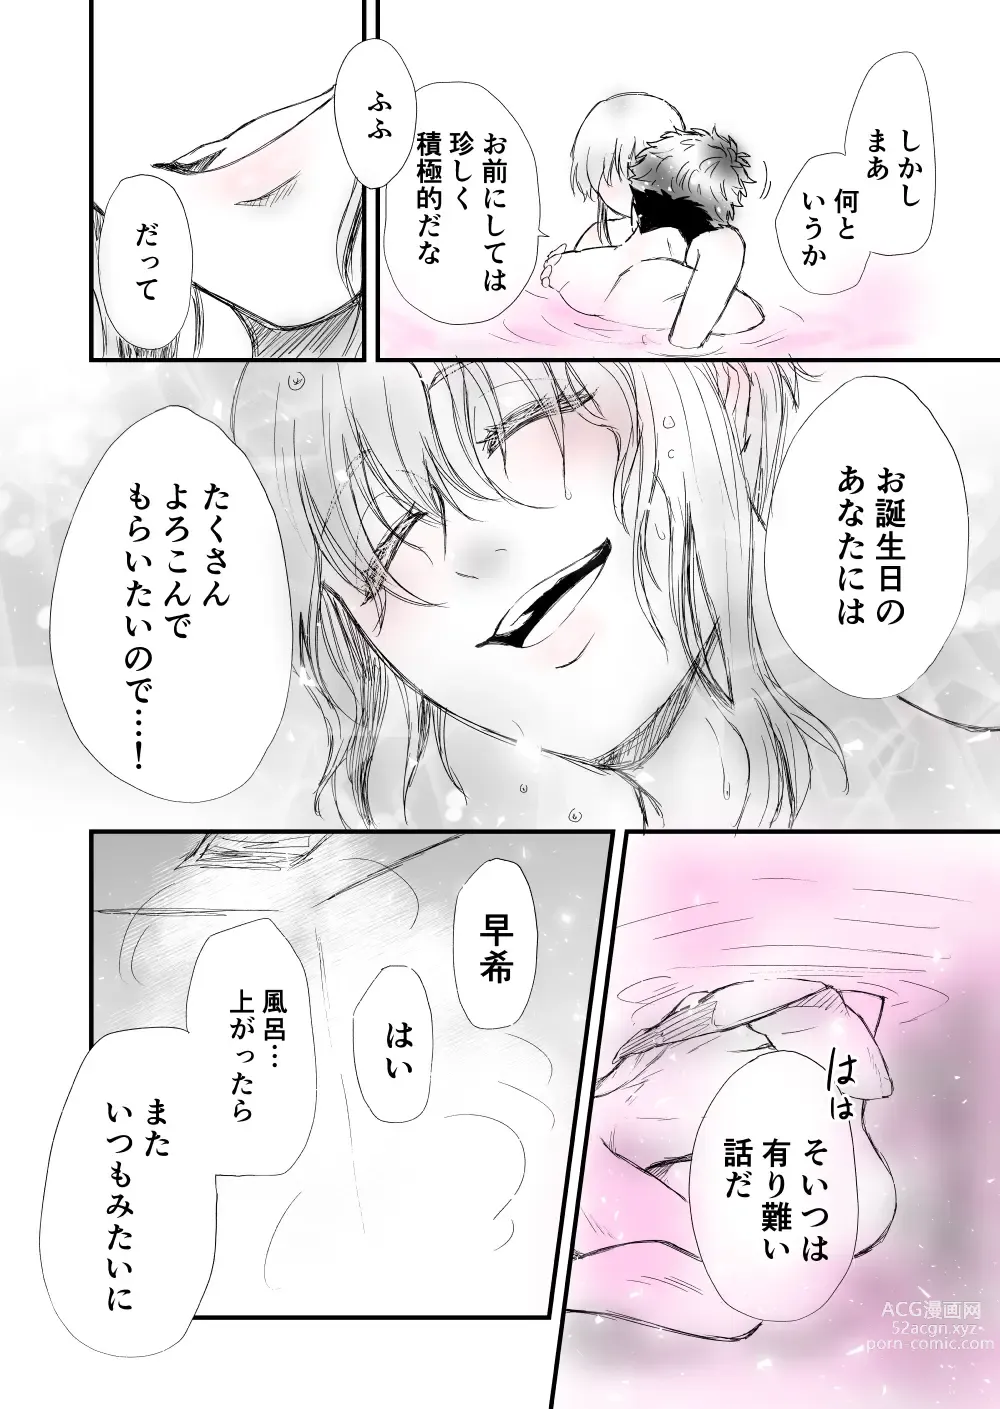 Page 18 of doujinshi 3